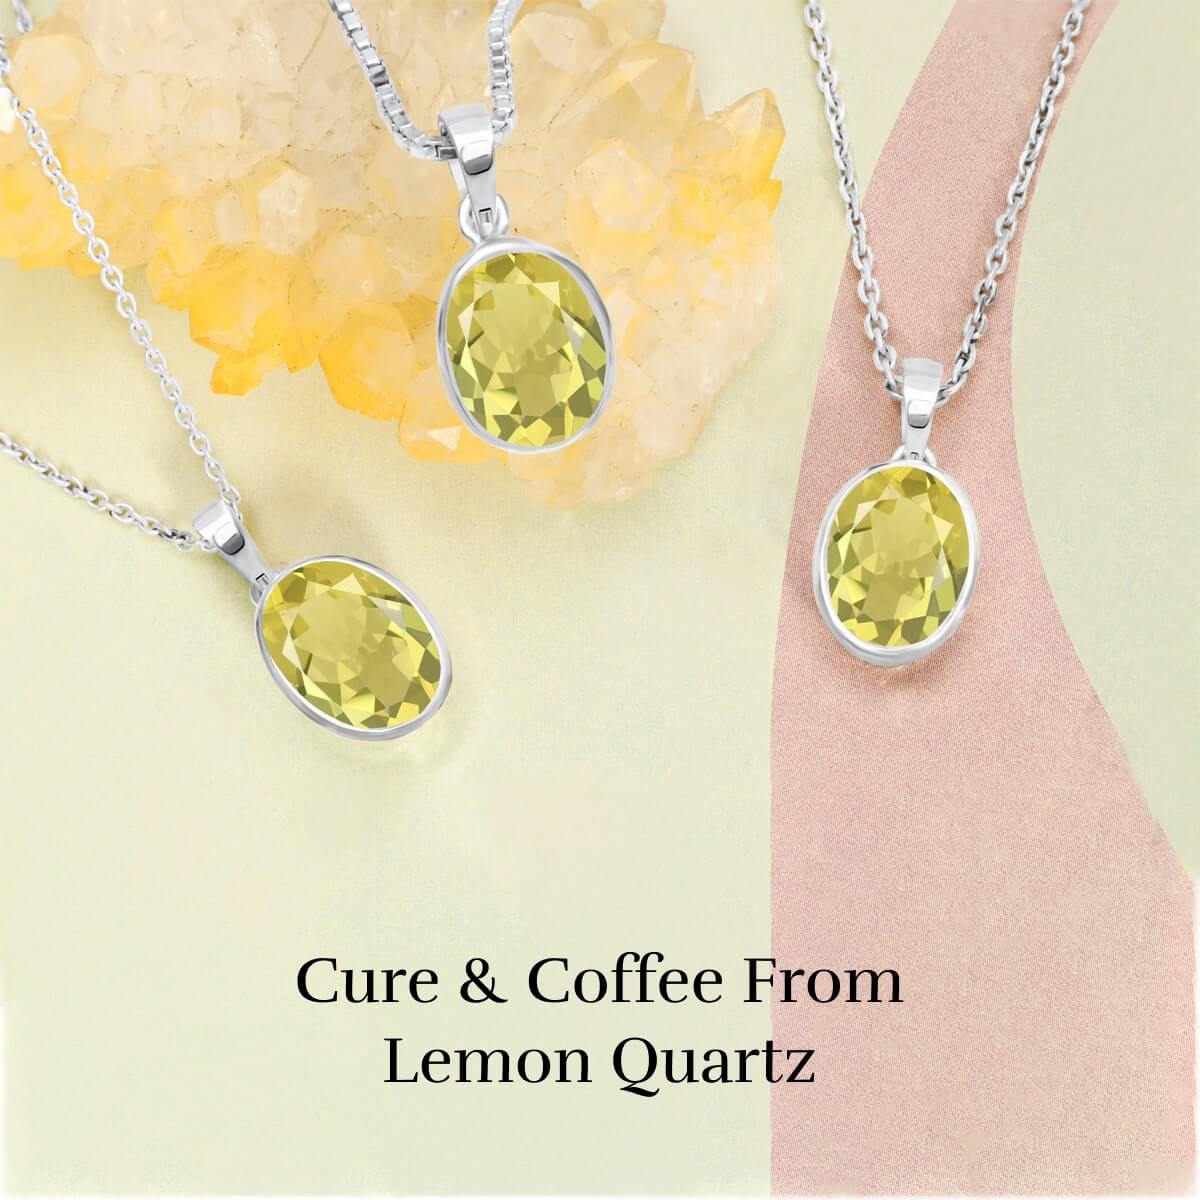 Meaning and Benefits of Lemon Quartz